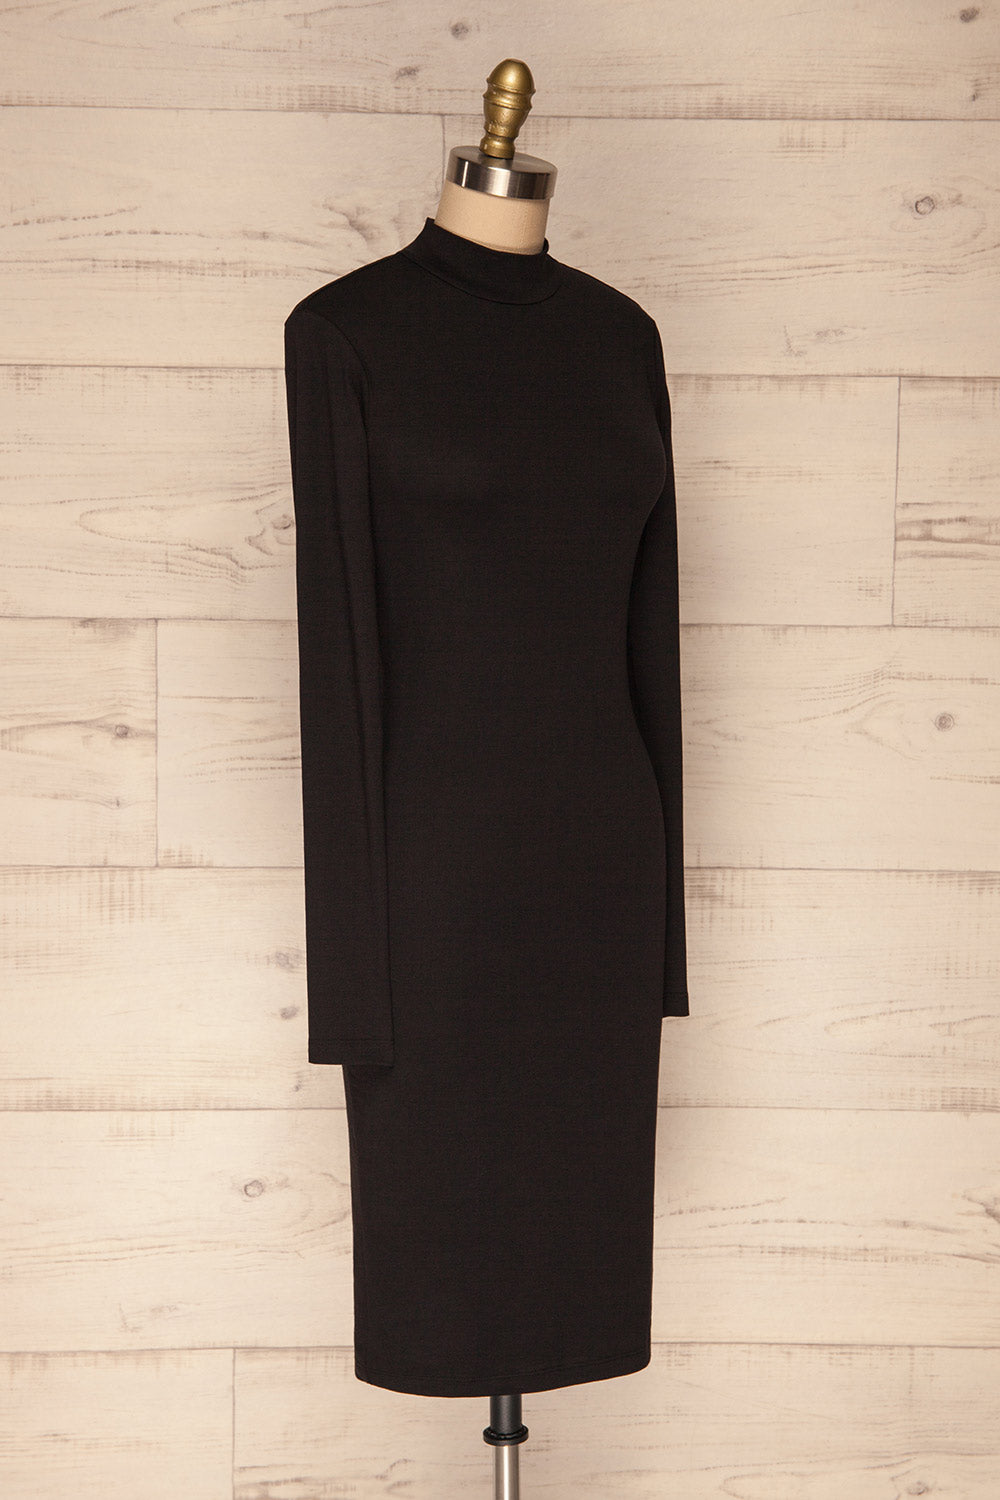 Alsdorf Poivre Black Long Sleeved Fitted Dress | La Petite Garçonne side view 